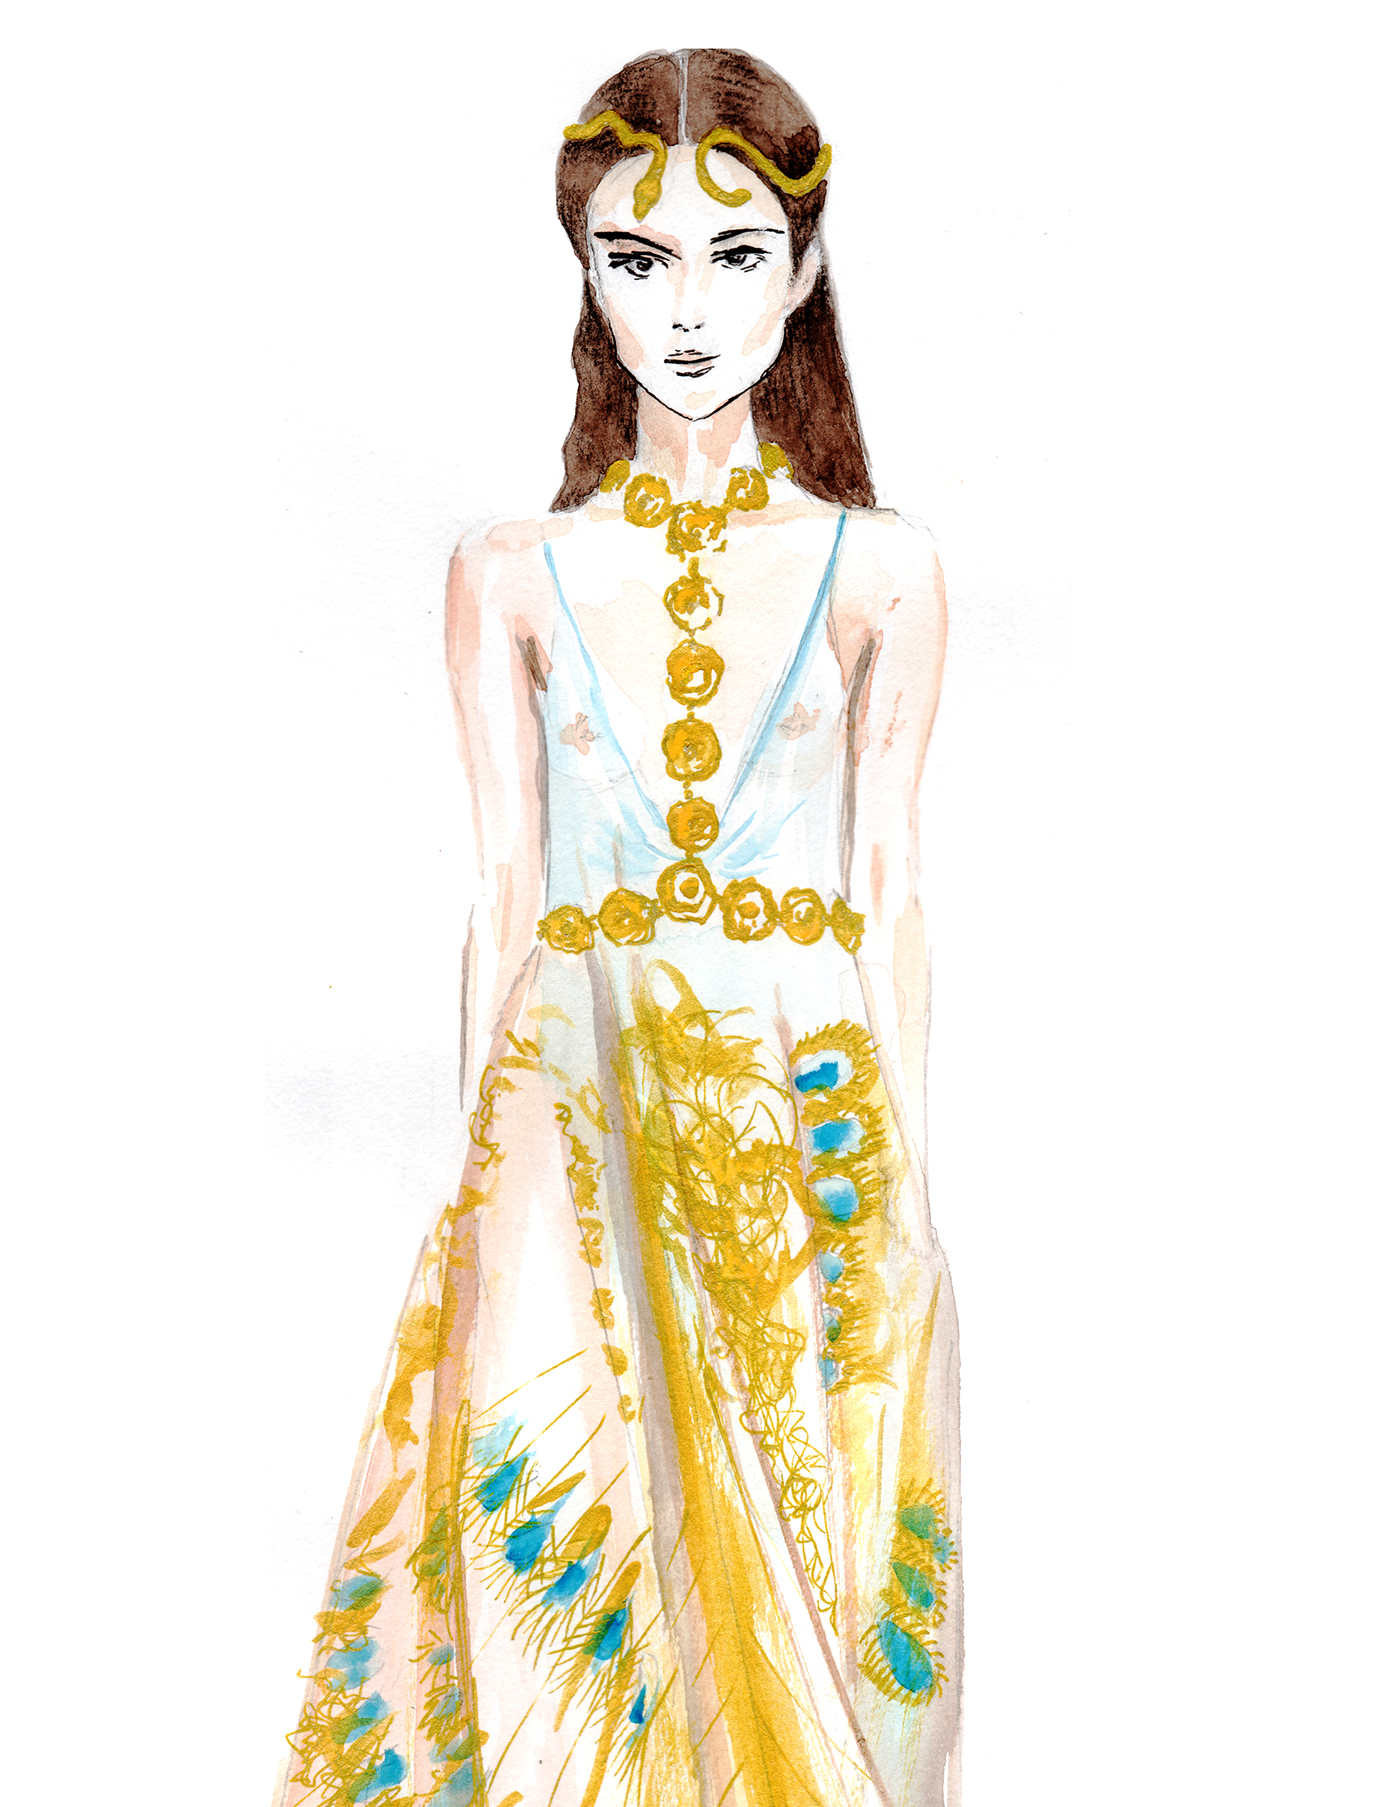 Fashion  fasion illustration Drawing  Costume Design  pret-a-potre model pattern vogue editorial magazine